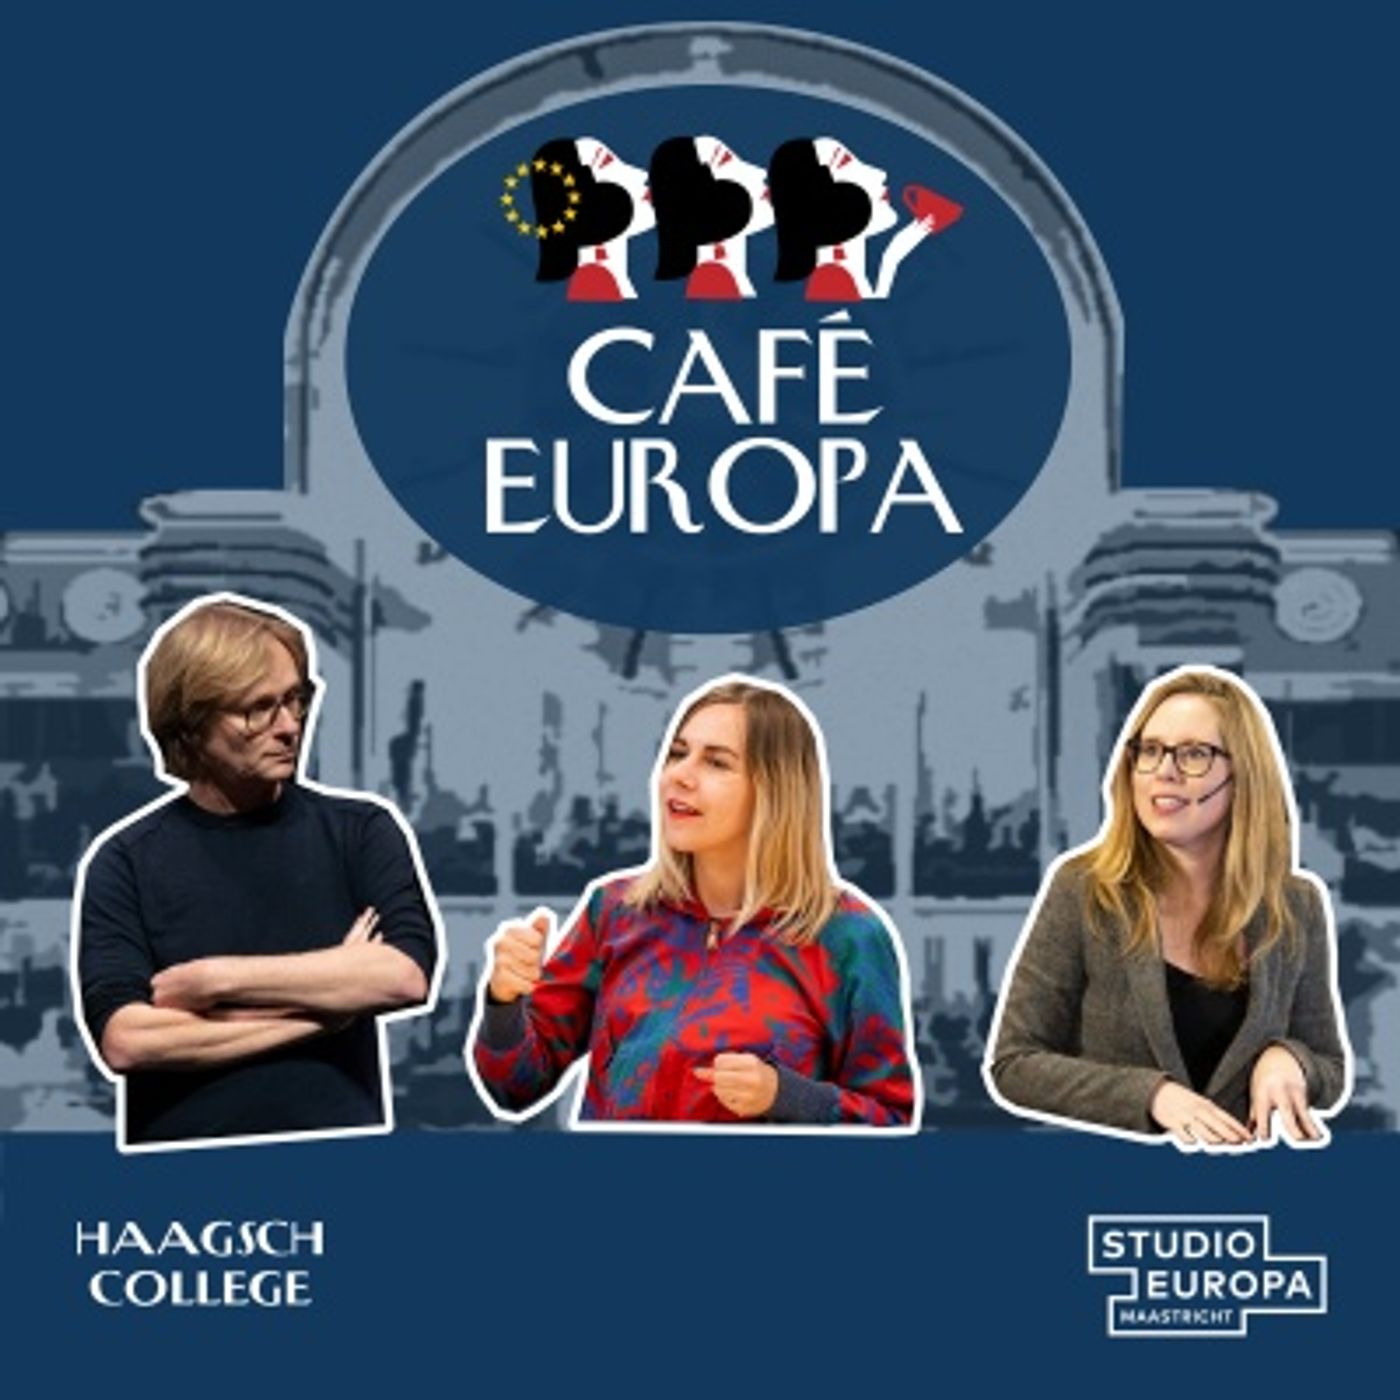 Café Europa #S6E09: Europese Spitzenkandidaten in debat - wie bepaalt straks de koers in de EU?